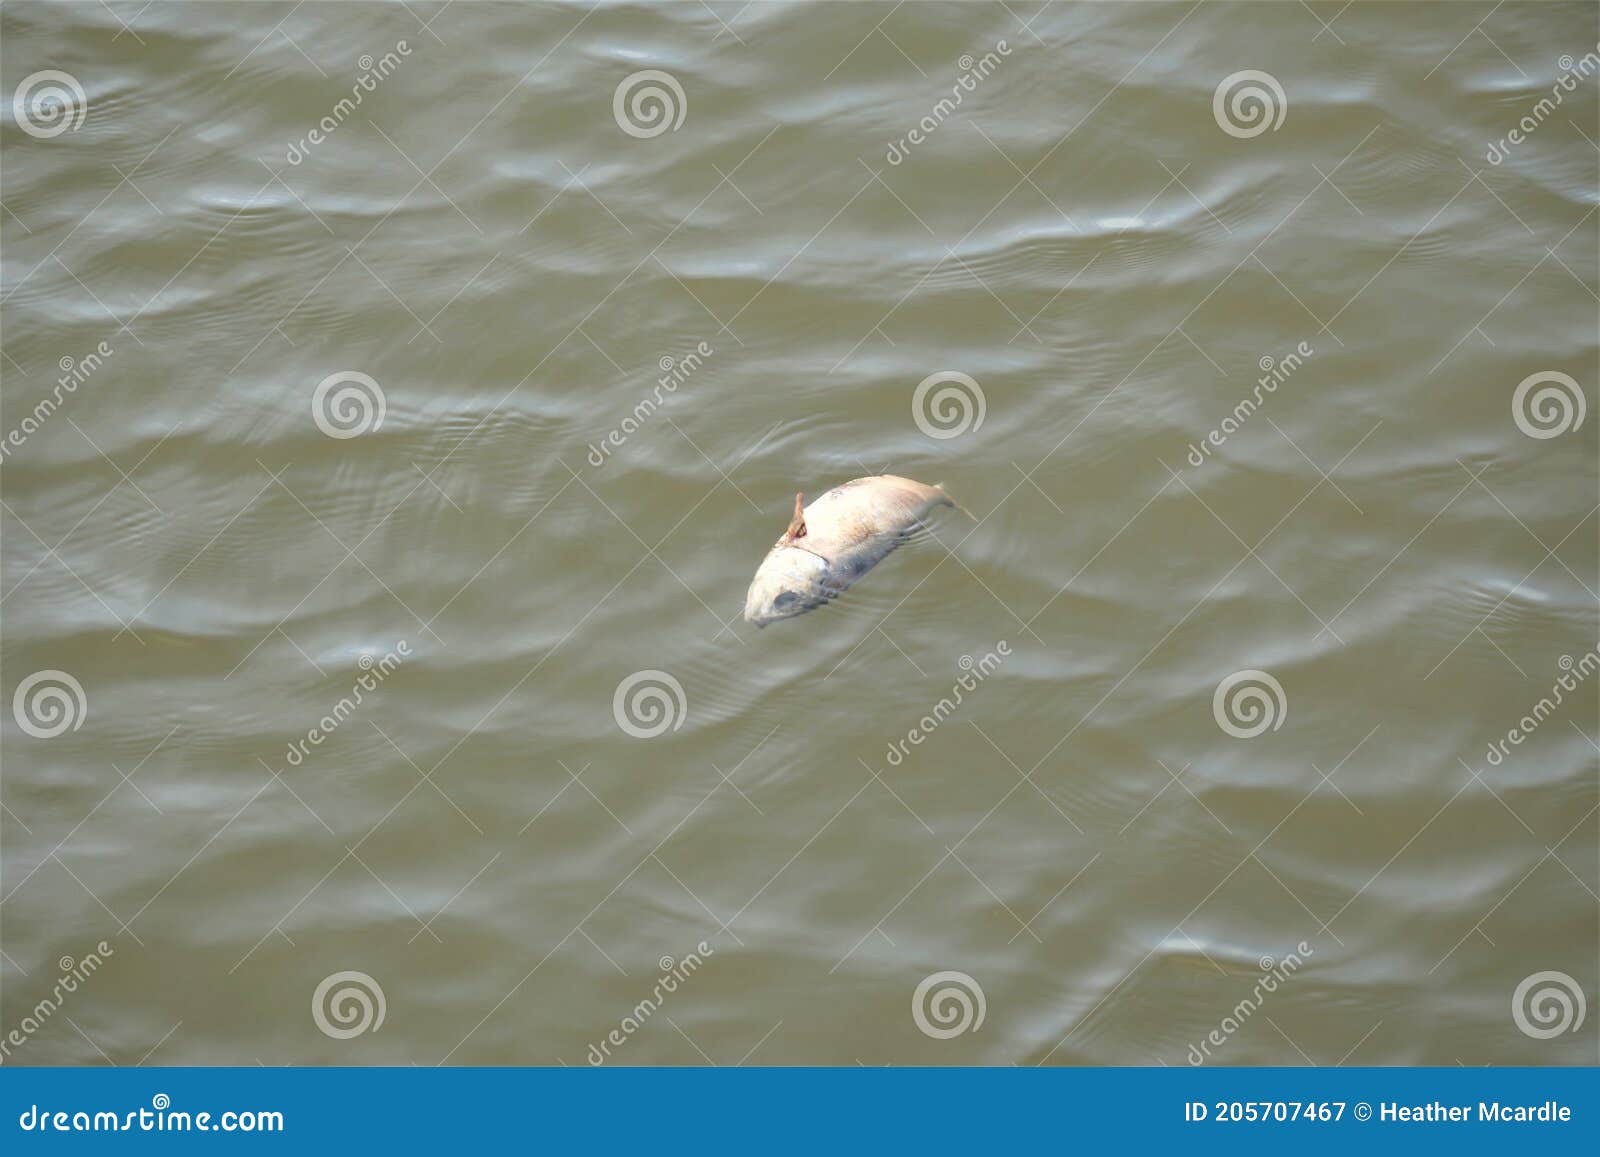 Dead Fish in Calm Hudson River Water Stock Image - Image of gotham,  fishermen: 205707467